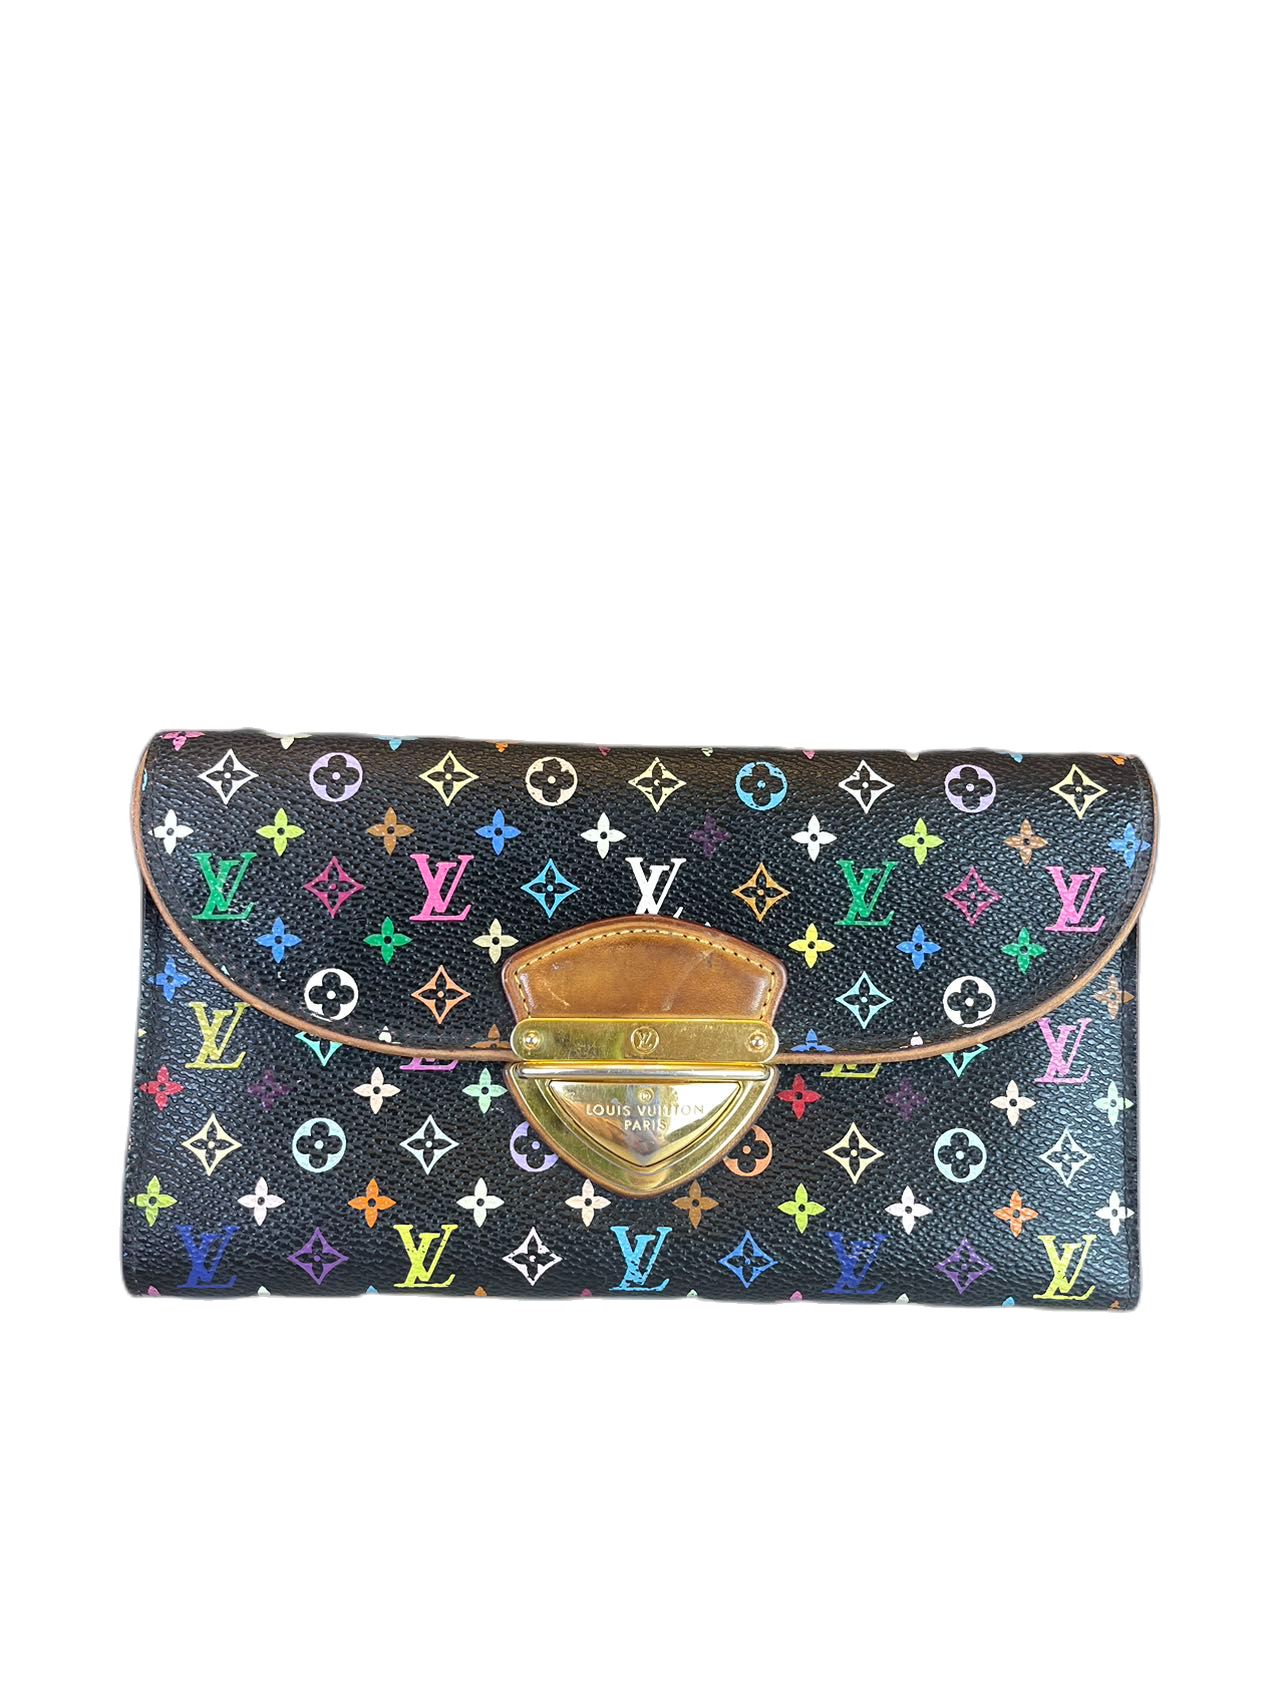 Preloved Louis Vuitton Multicolored Wallet